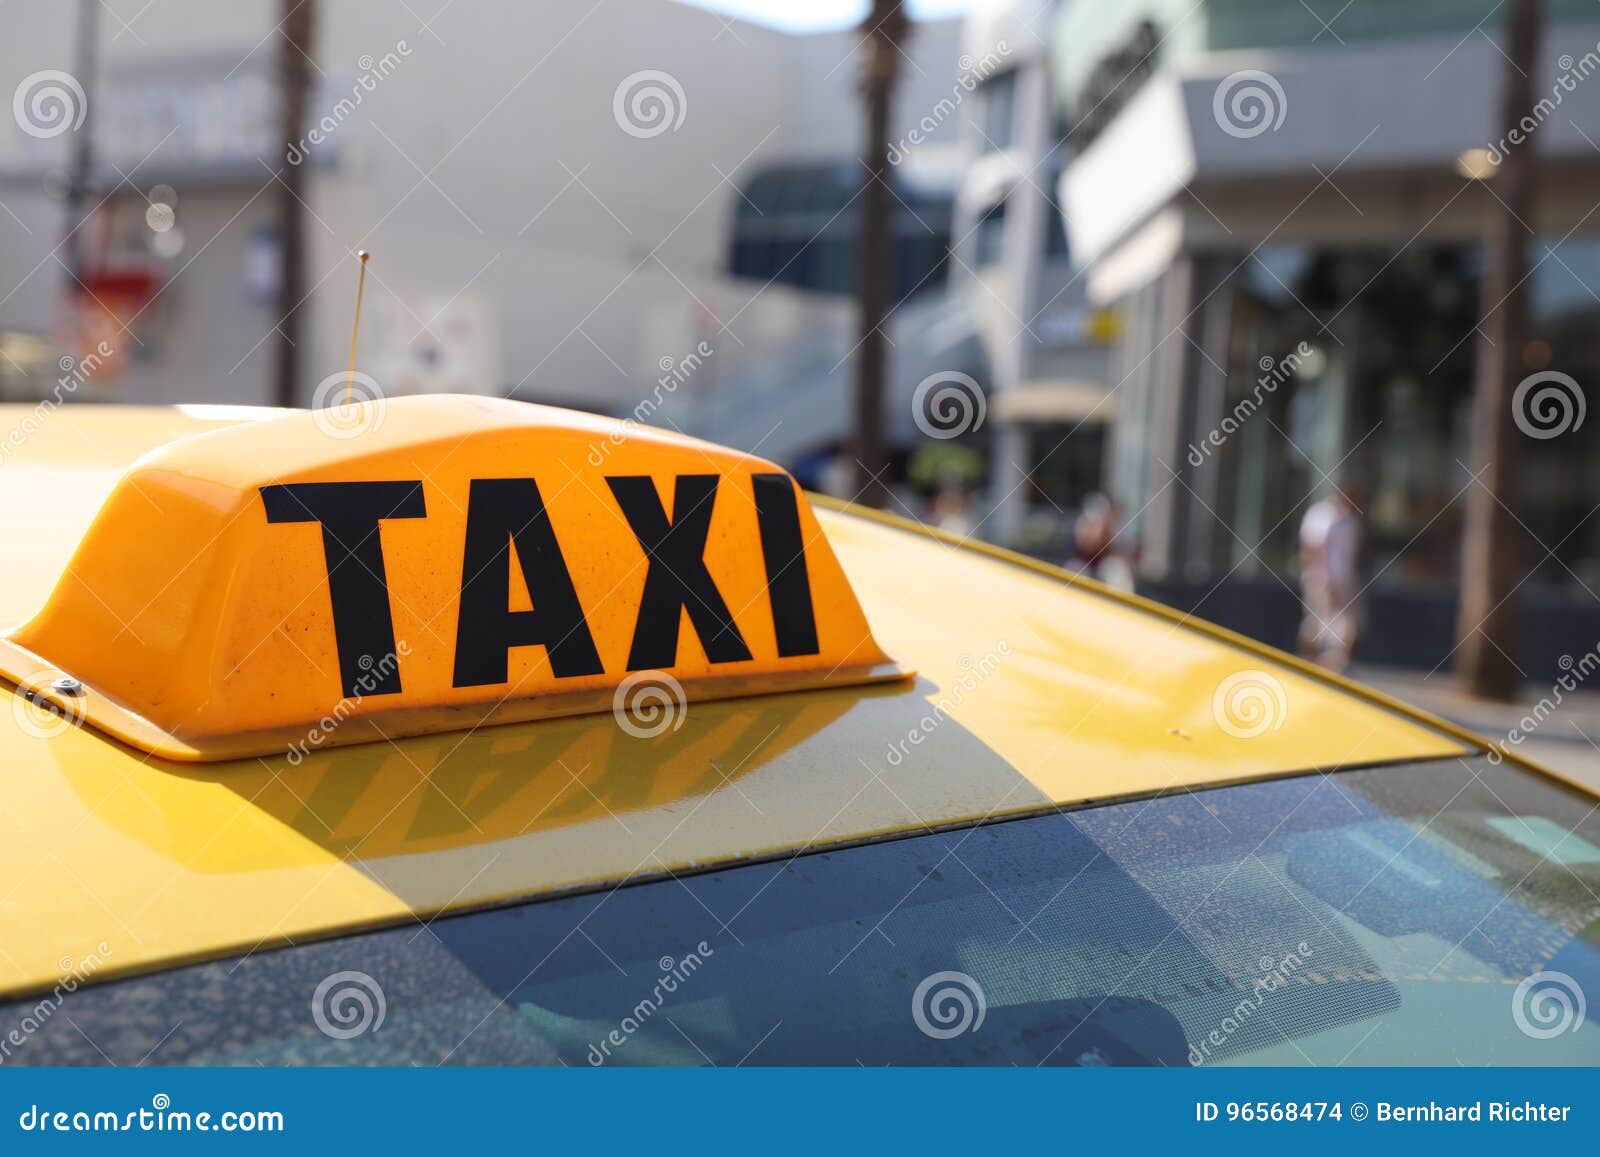 yellow cab in la